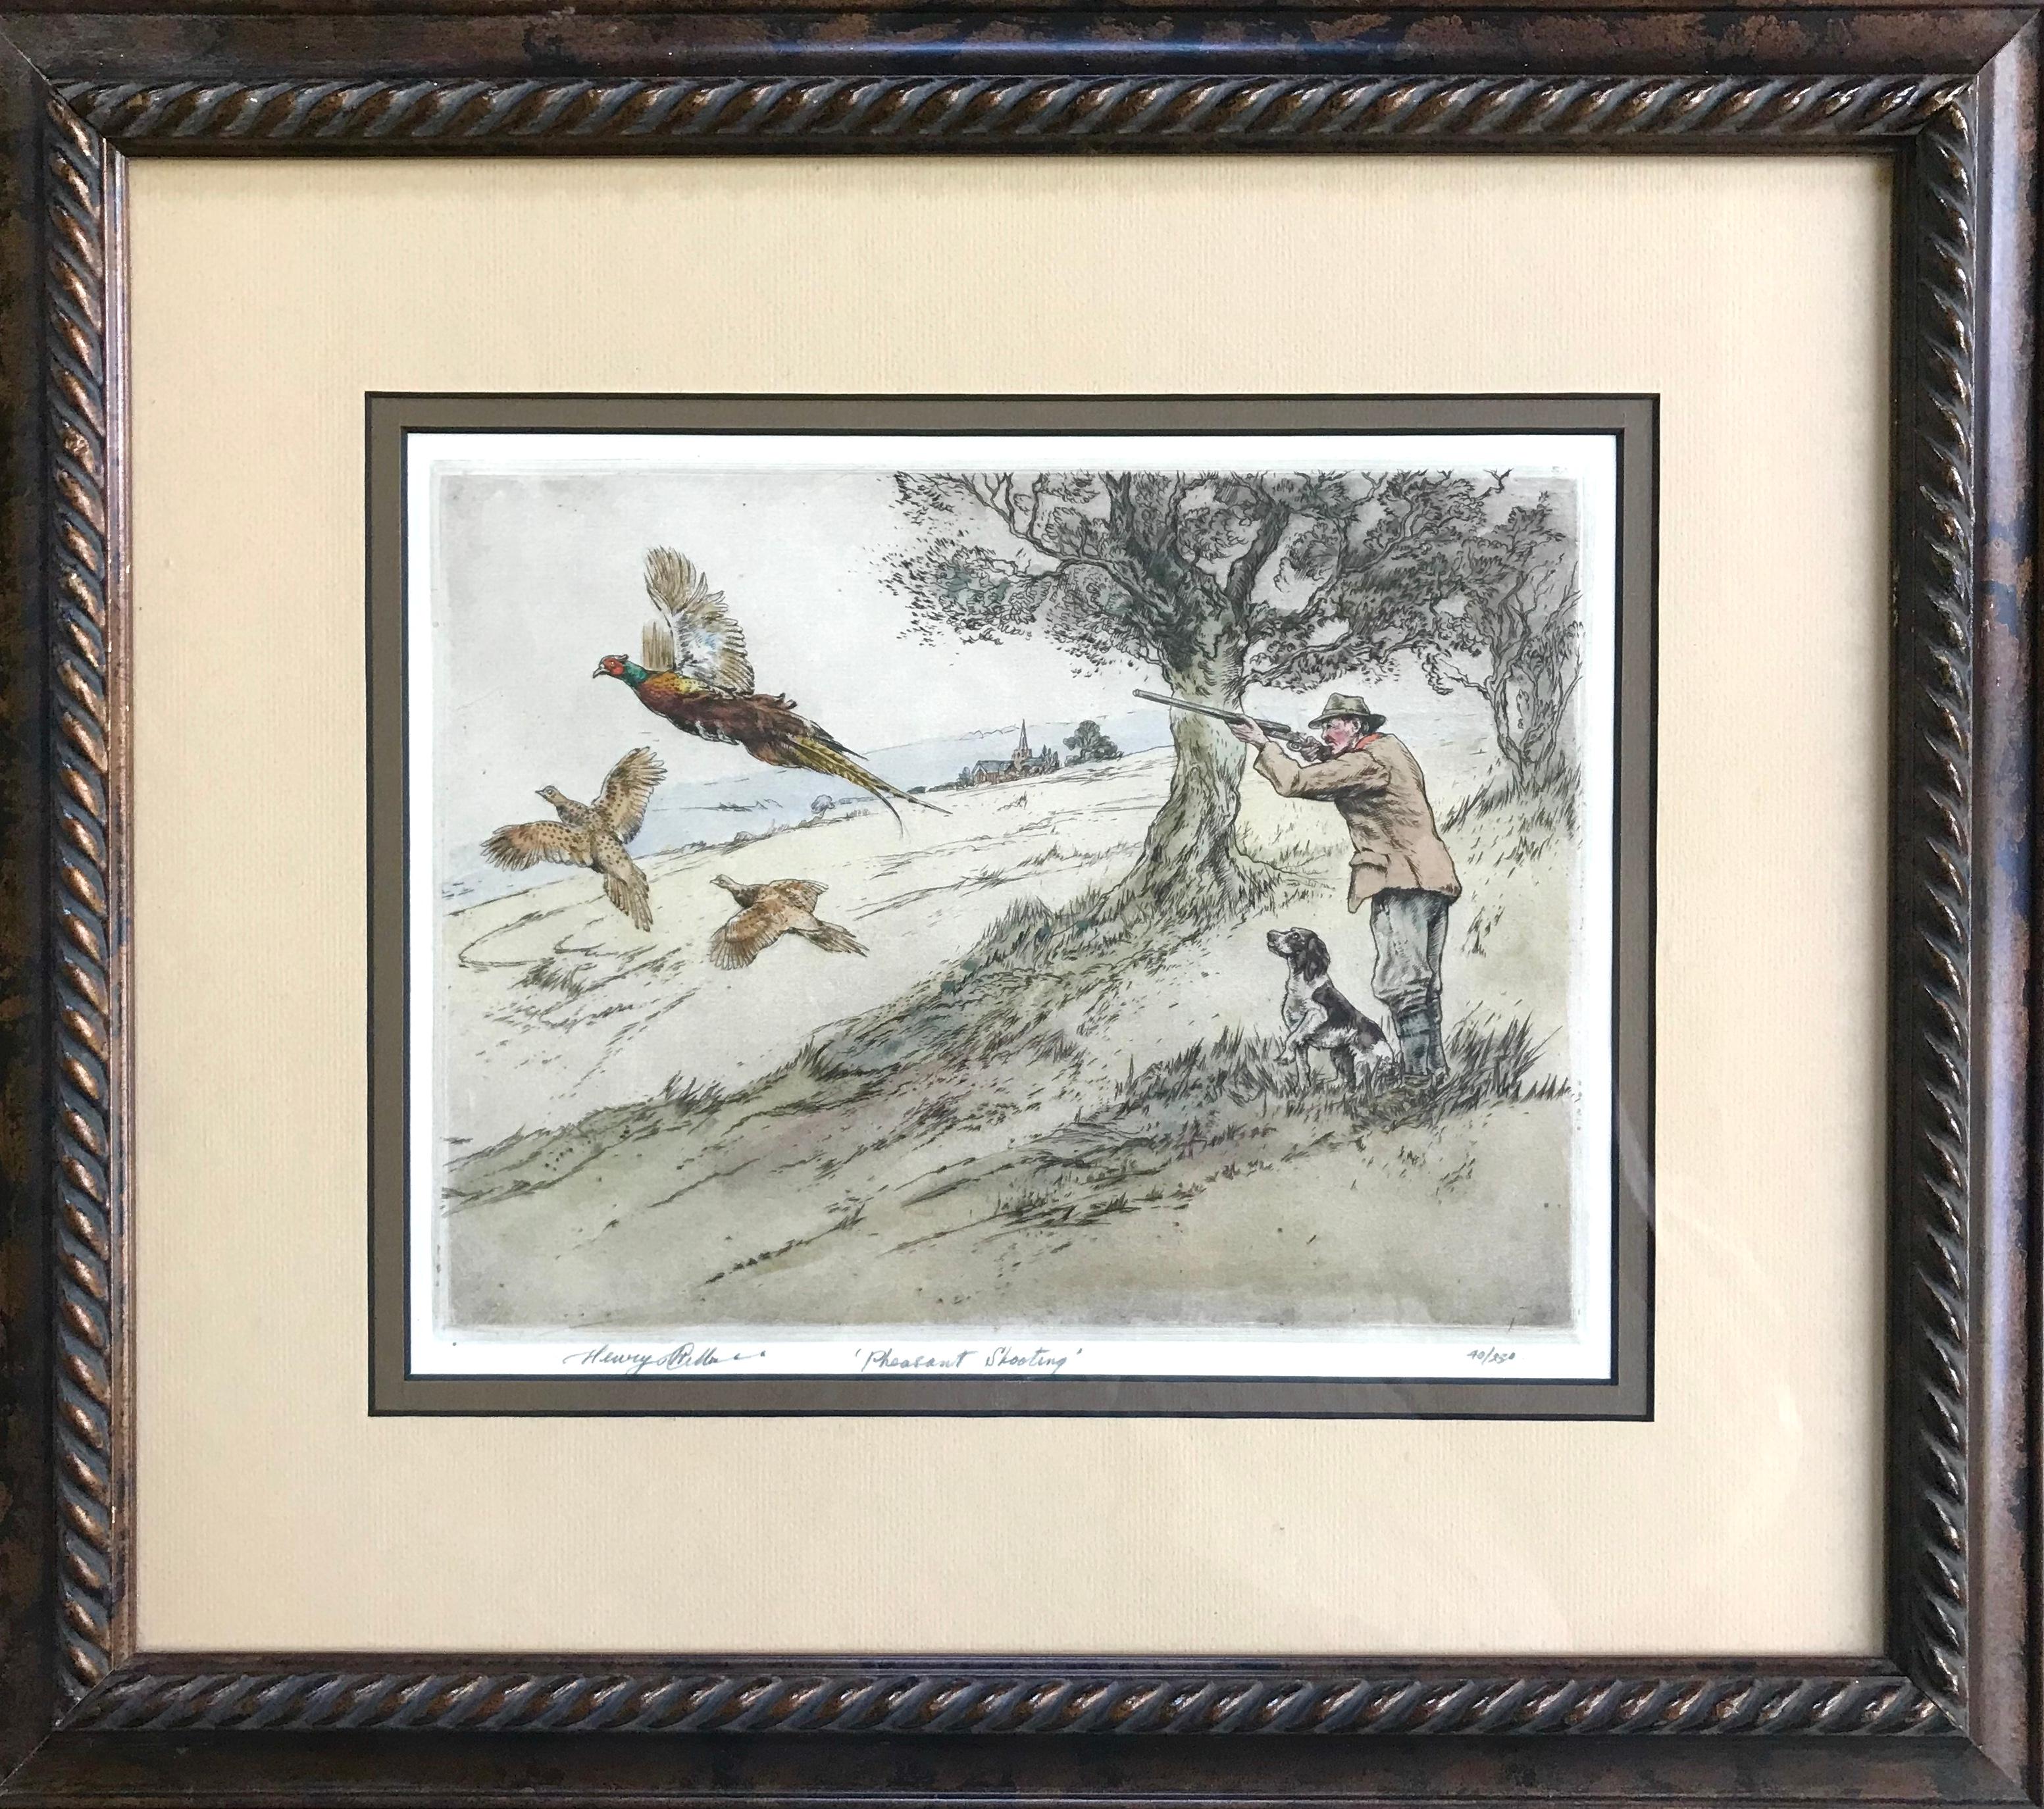 Henry Wilkinson Figurative Print - “Pheasant Shooting”